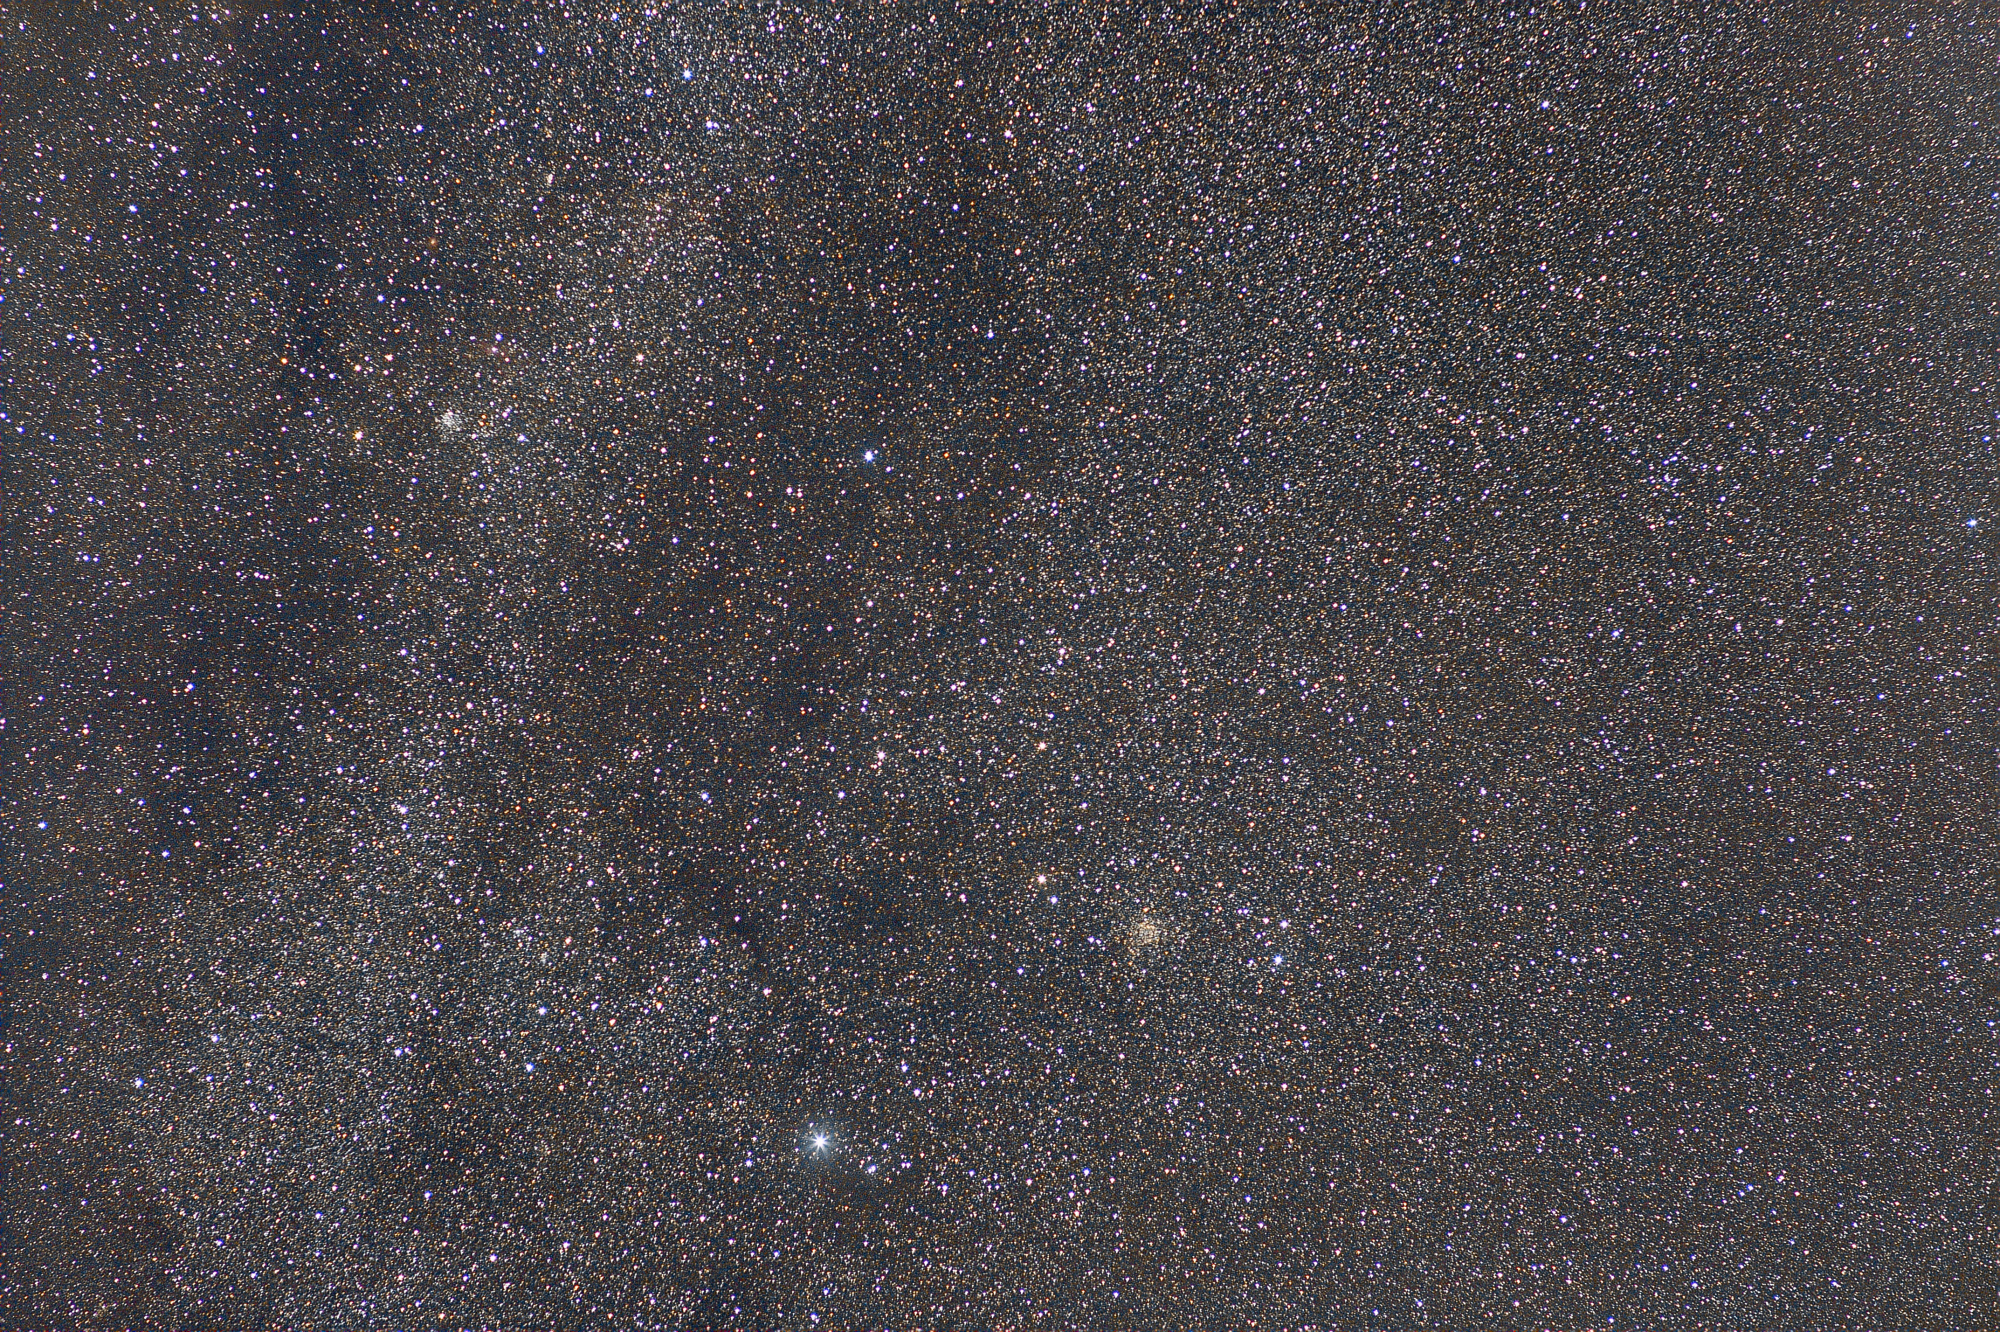 NGC7635_GRD-CHAMP_SIRIL_CS2_FITSWORK.thumb.jpg.0a2e95d741e67ace3de78e9f1628d7b0.jpg